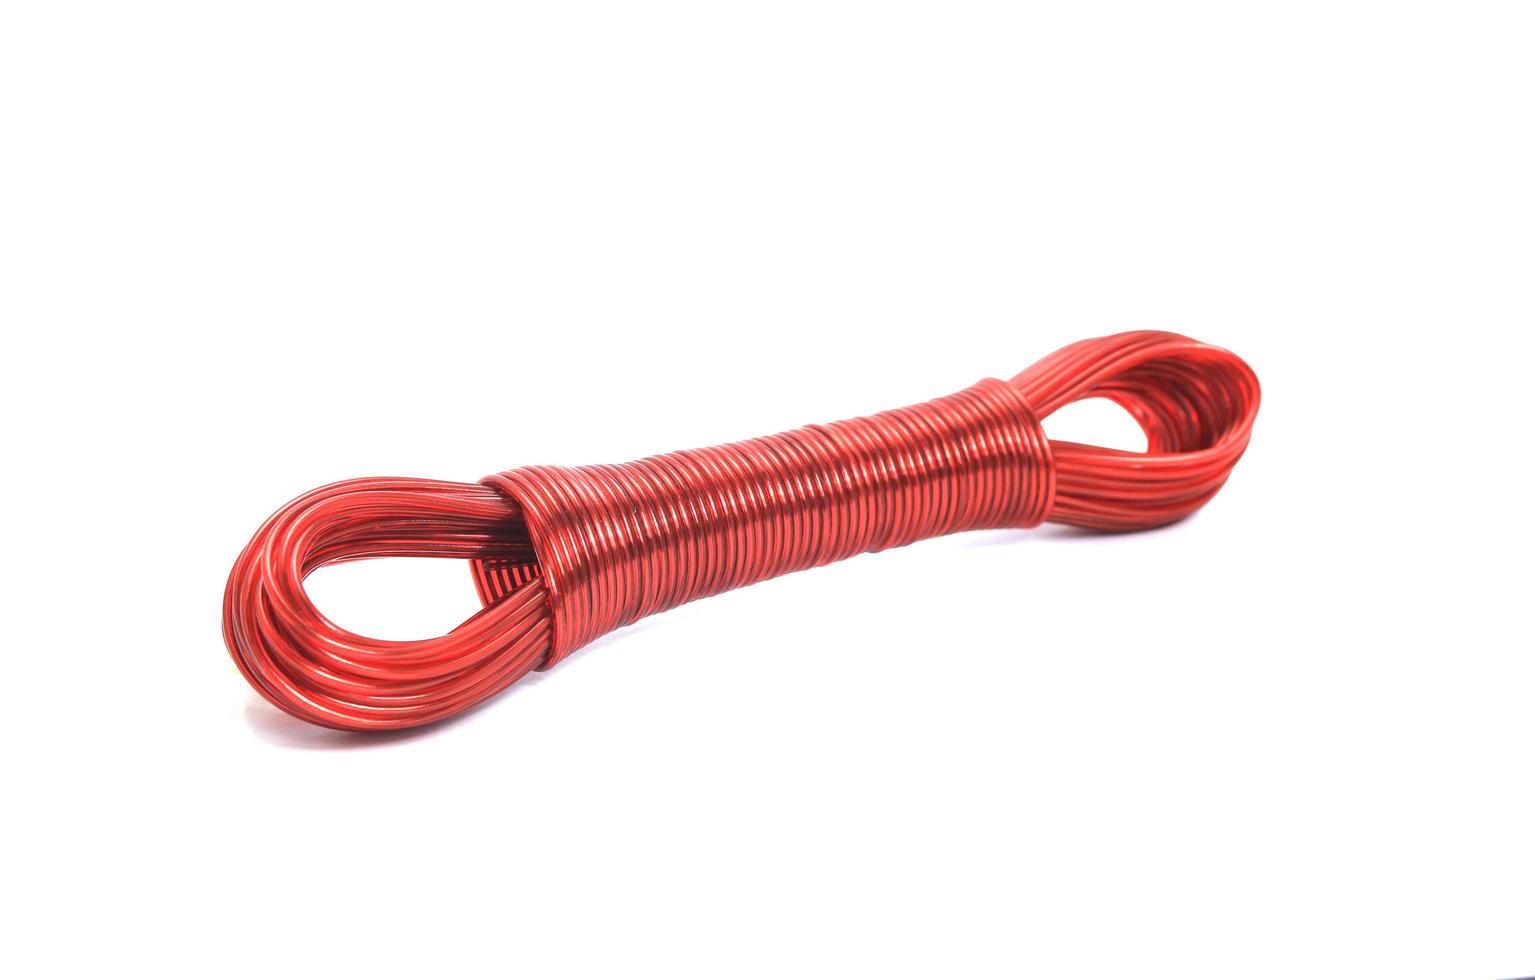 corde en nylon rouge photo